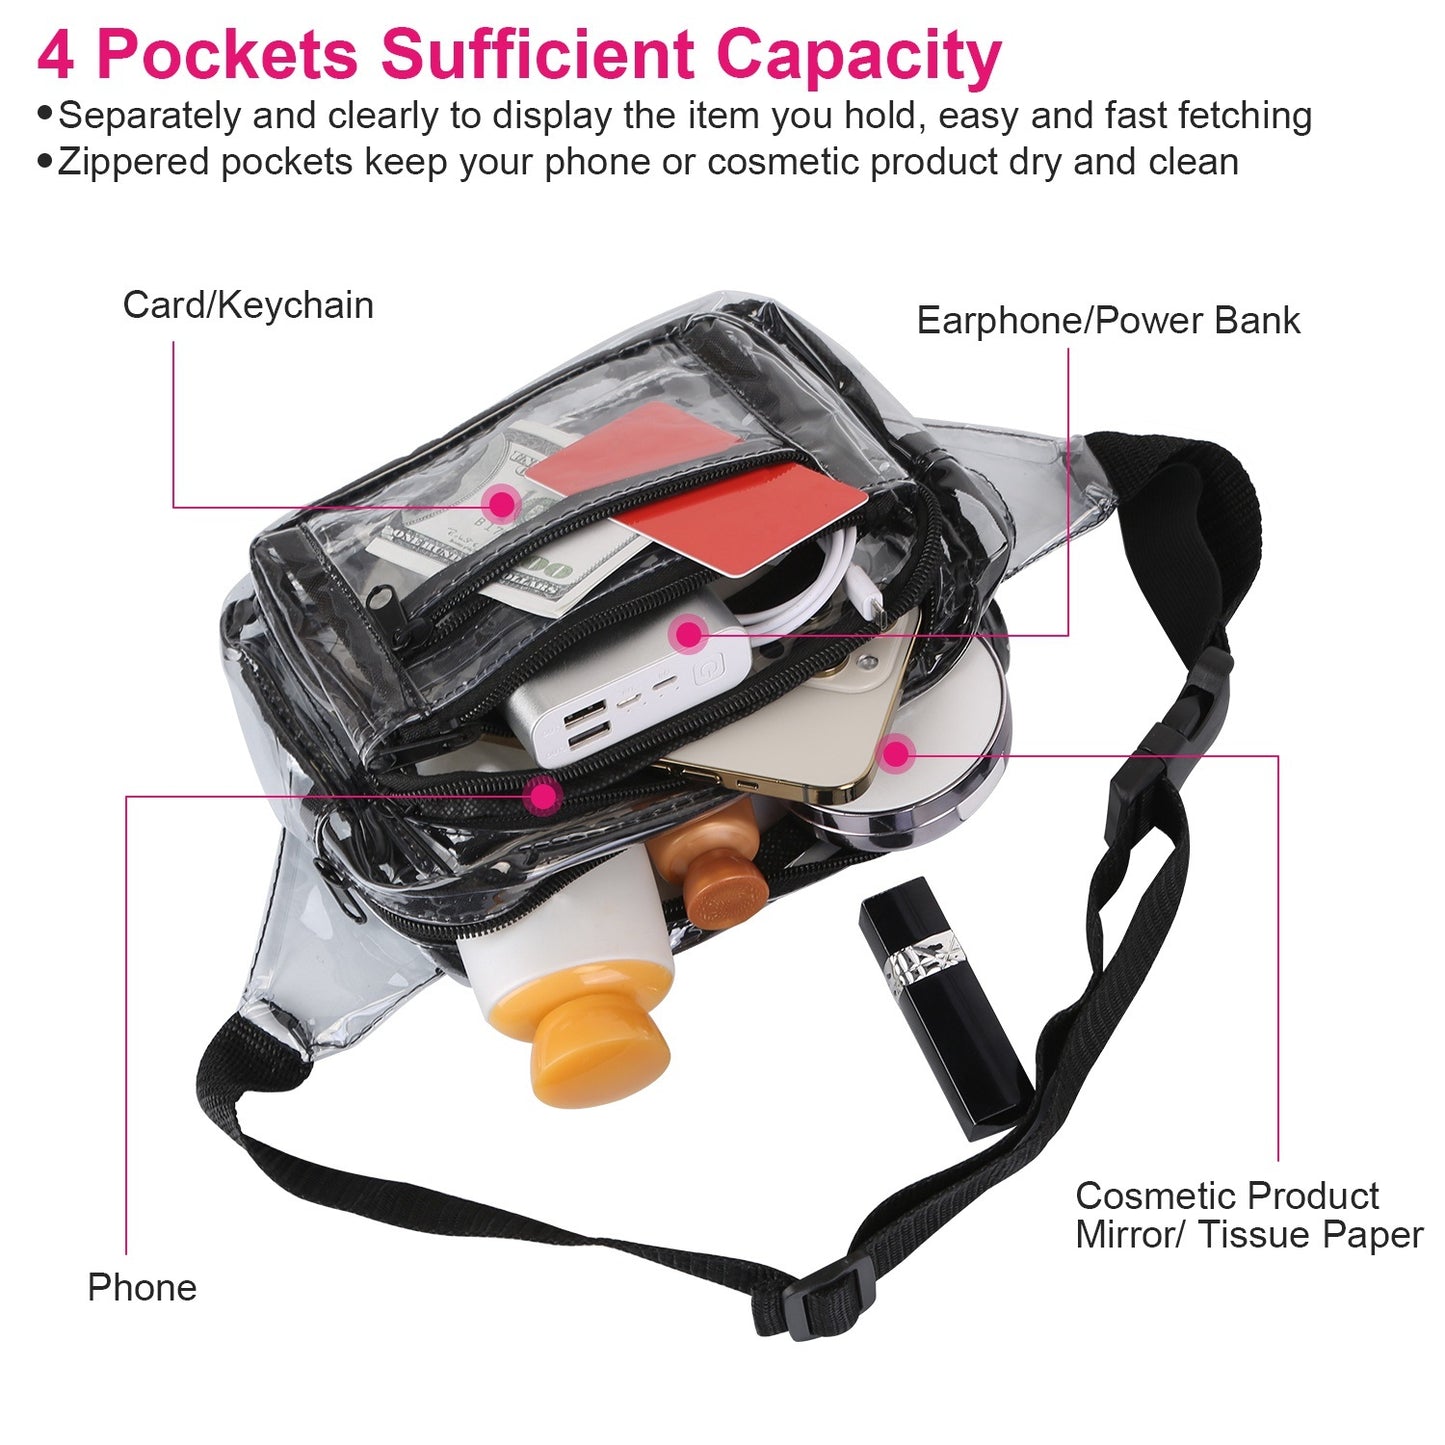 Clear Fanny Pack Unisex Transparent Waist Pouch Belt Bag Clear Purse Chest Bag for Outdoor Sport Travel Beach Concerts Travel